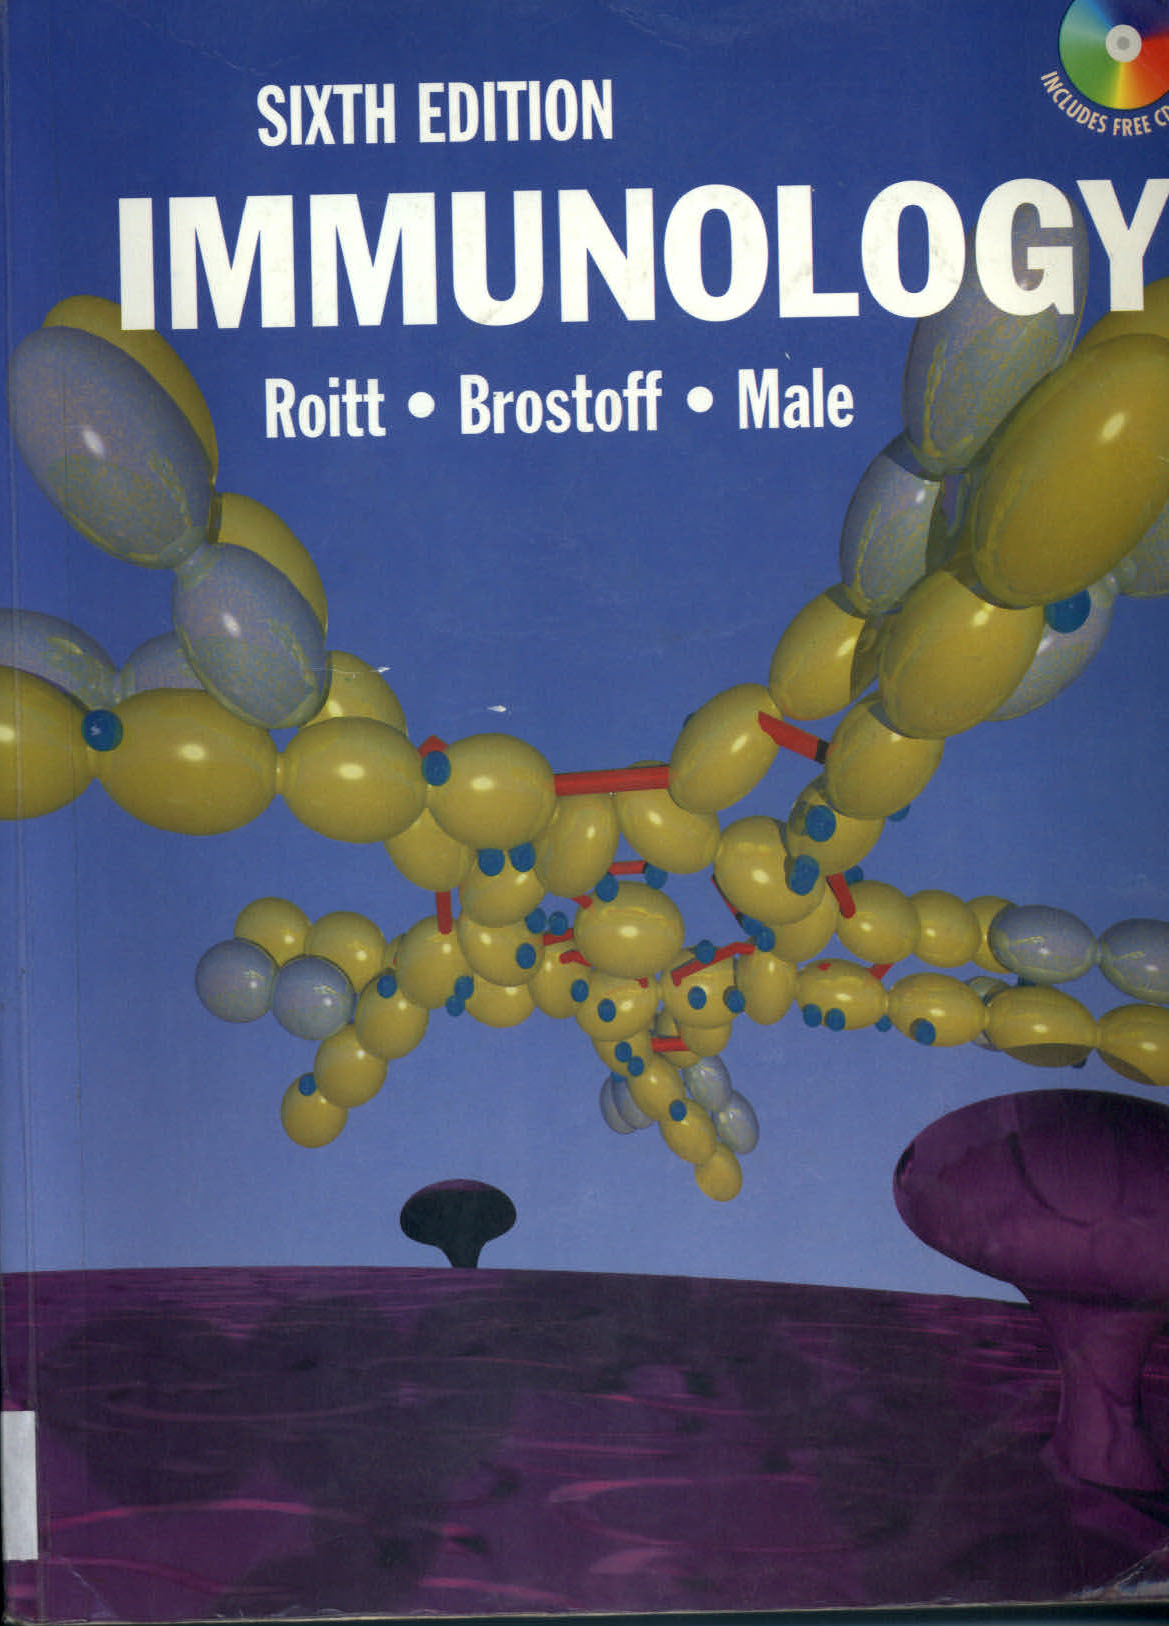  - immunology1